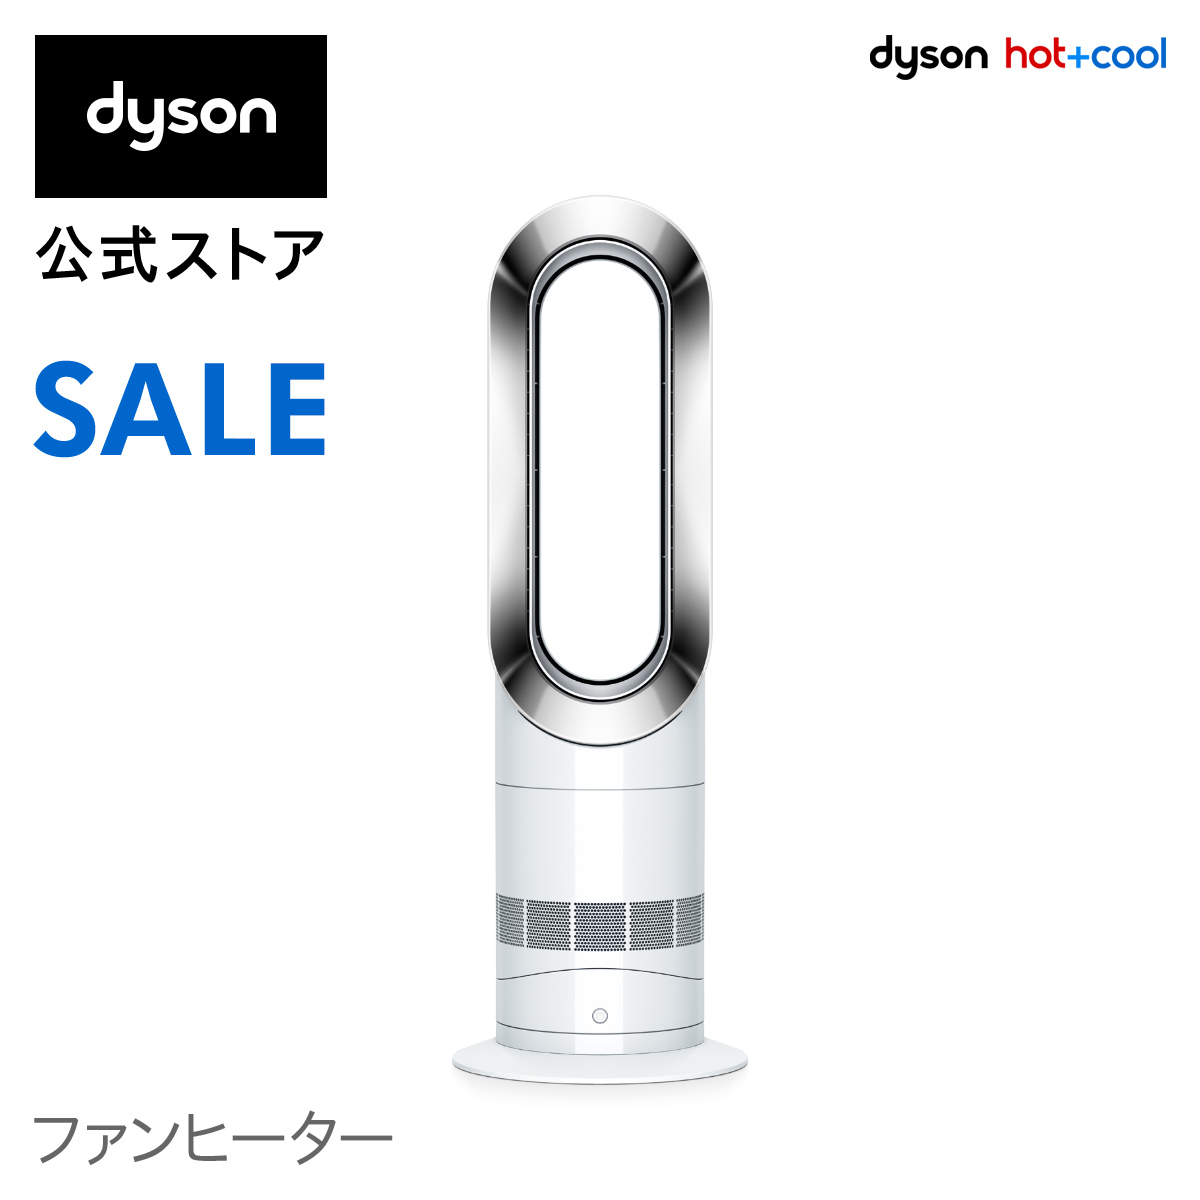 Dyson ダイソン ホットアンドクール 超歓迎された dyson ヒーター 扇風機 暖房 AM09 WN 早割クーポン AM09WN ファンヒーター 30%OFF 22日23:59まで ニッケル ホワイト 期間限定価格 Hot+Cool